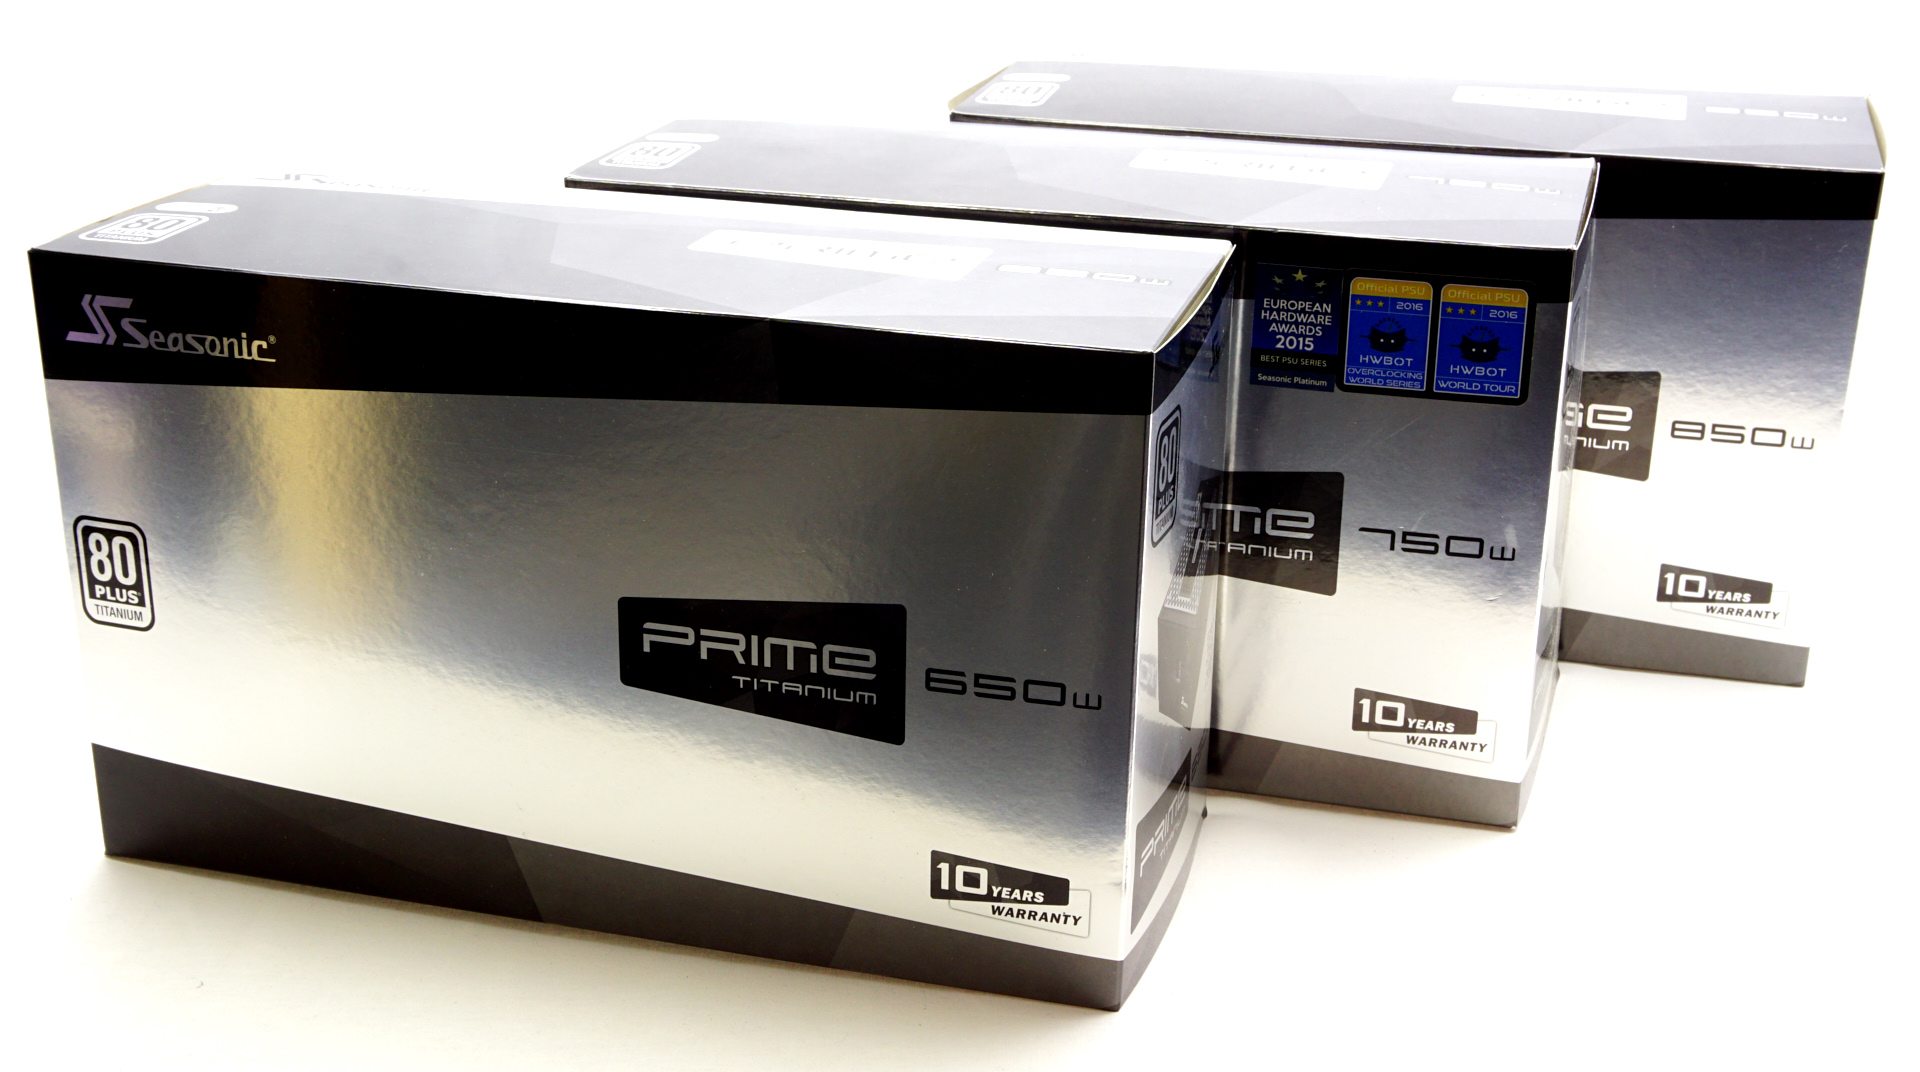 PC/タブレット PCパーツ The Seasonic PRIME Titanium PSU (650W, 750W, 850W) Review 